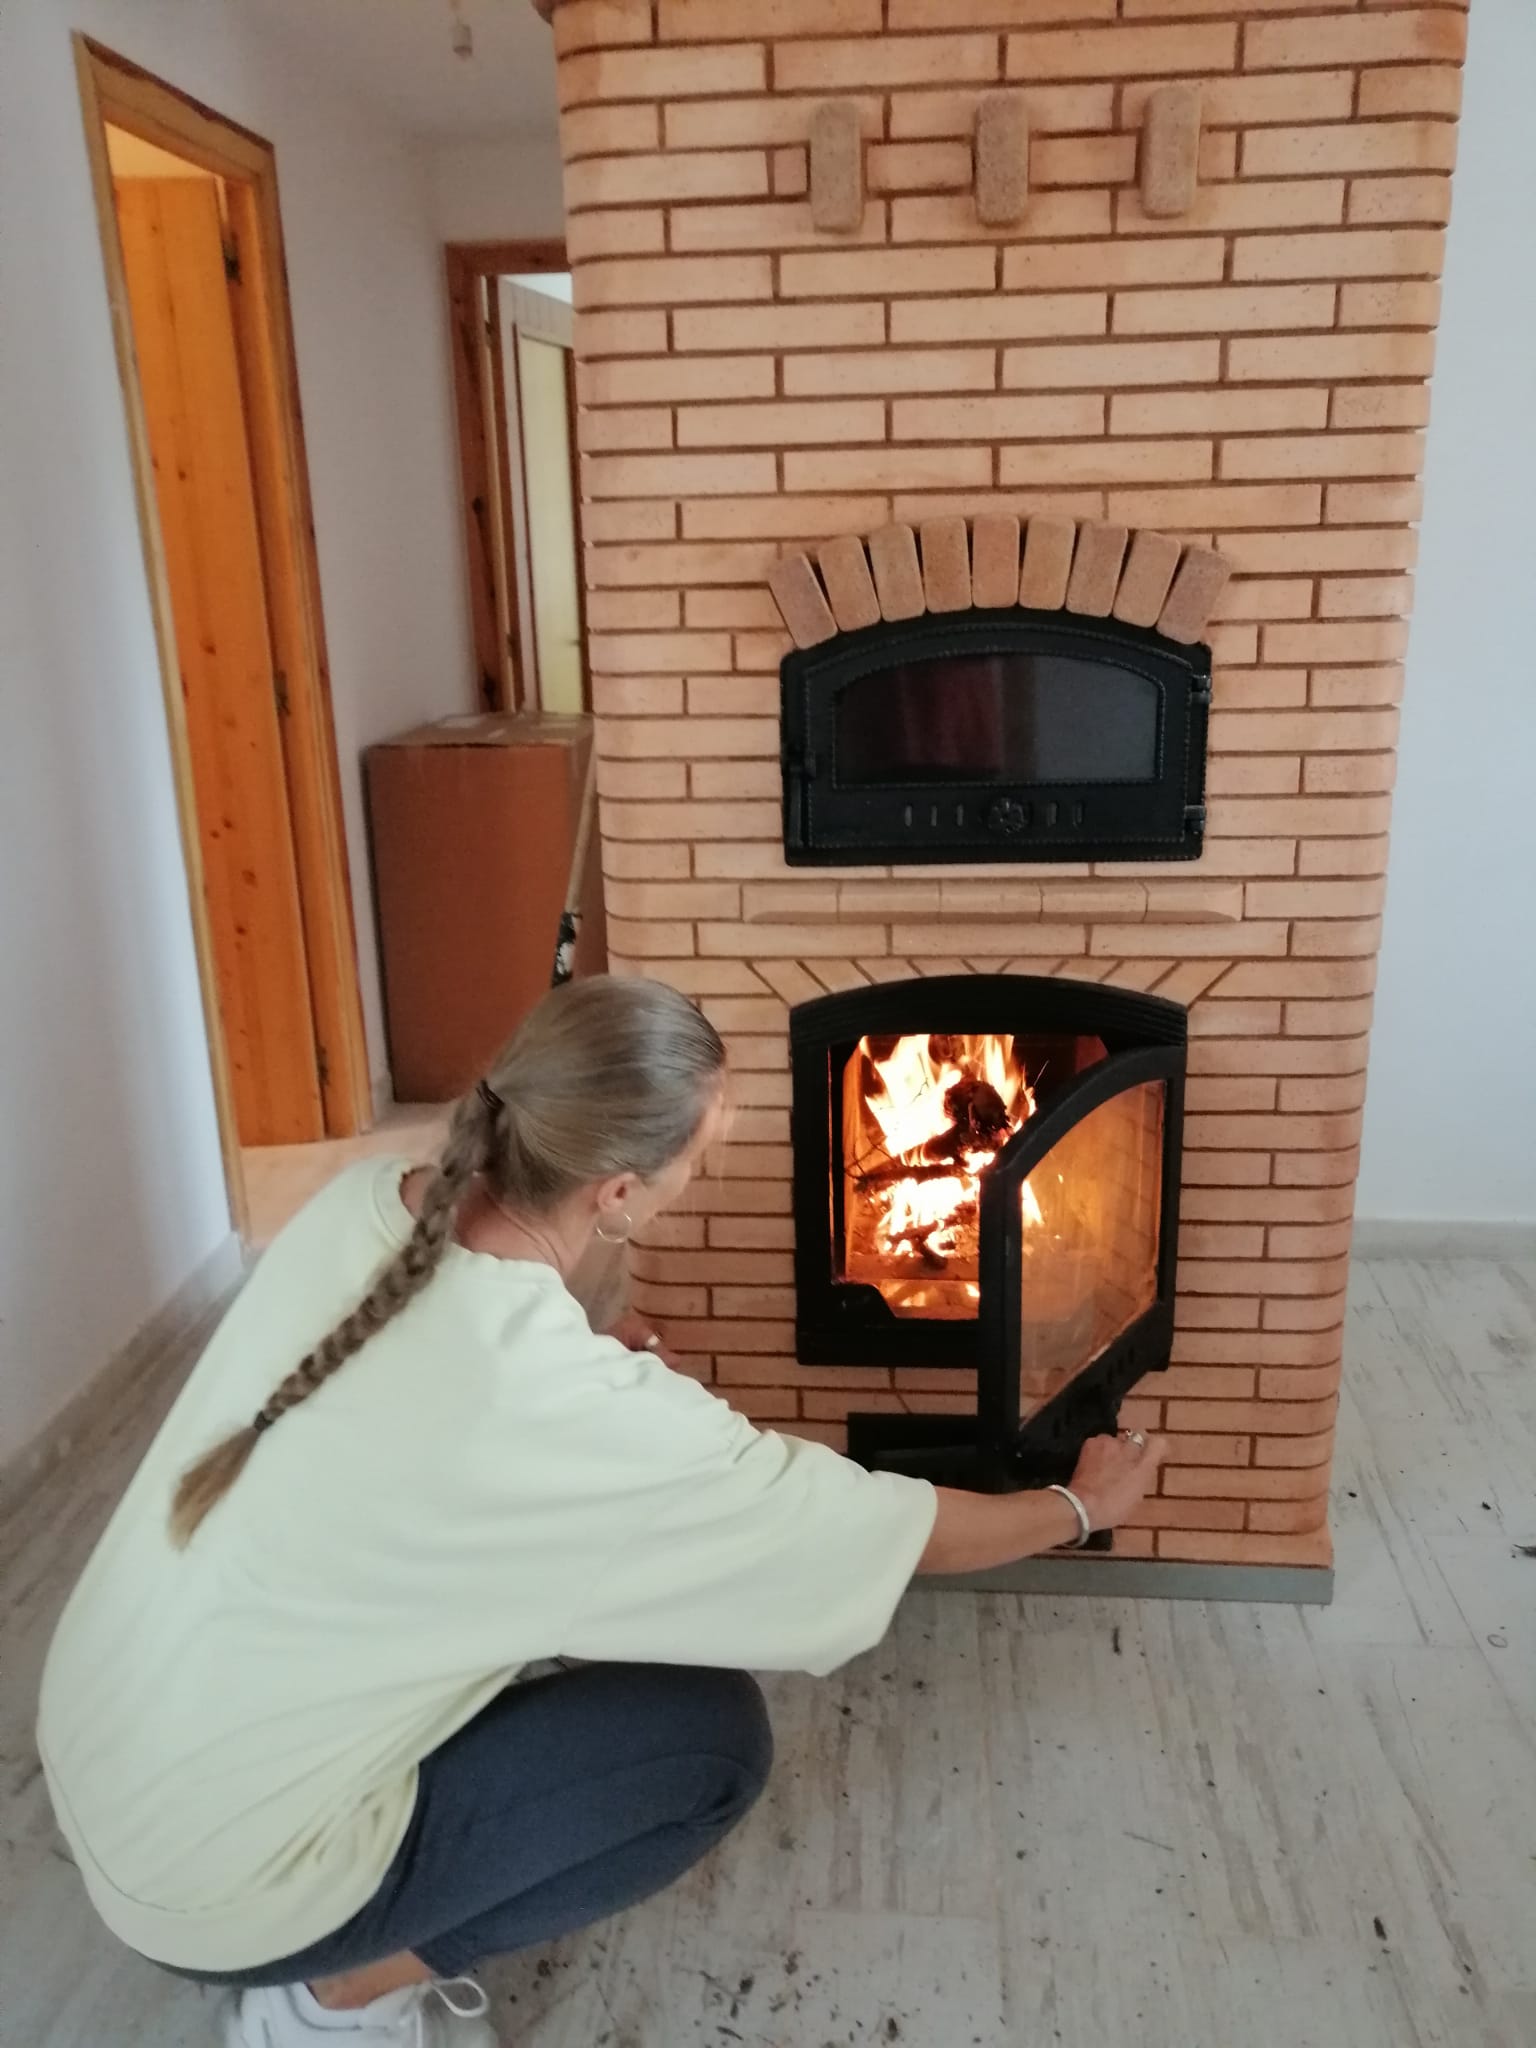 Estufa calefactora con horno. Segovia, octubre de 2022.